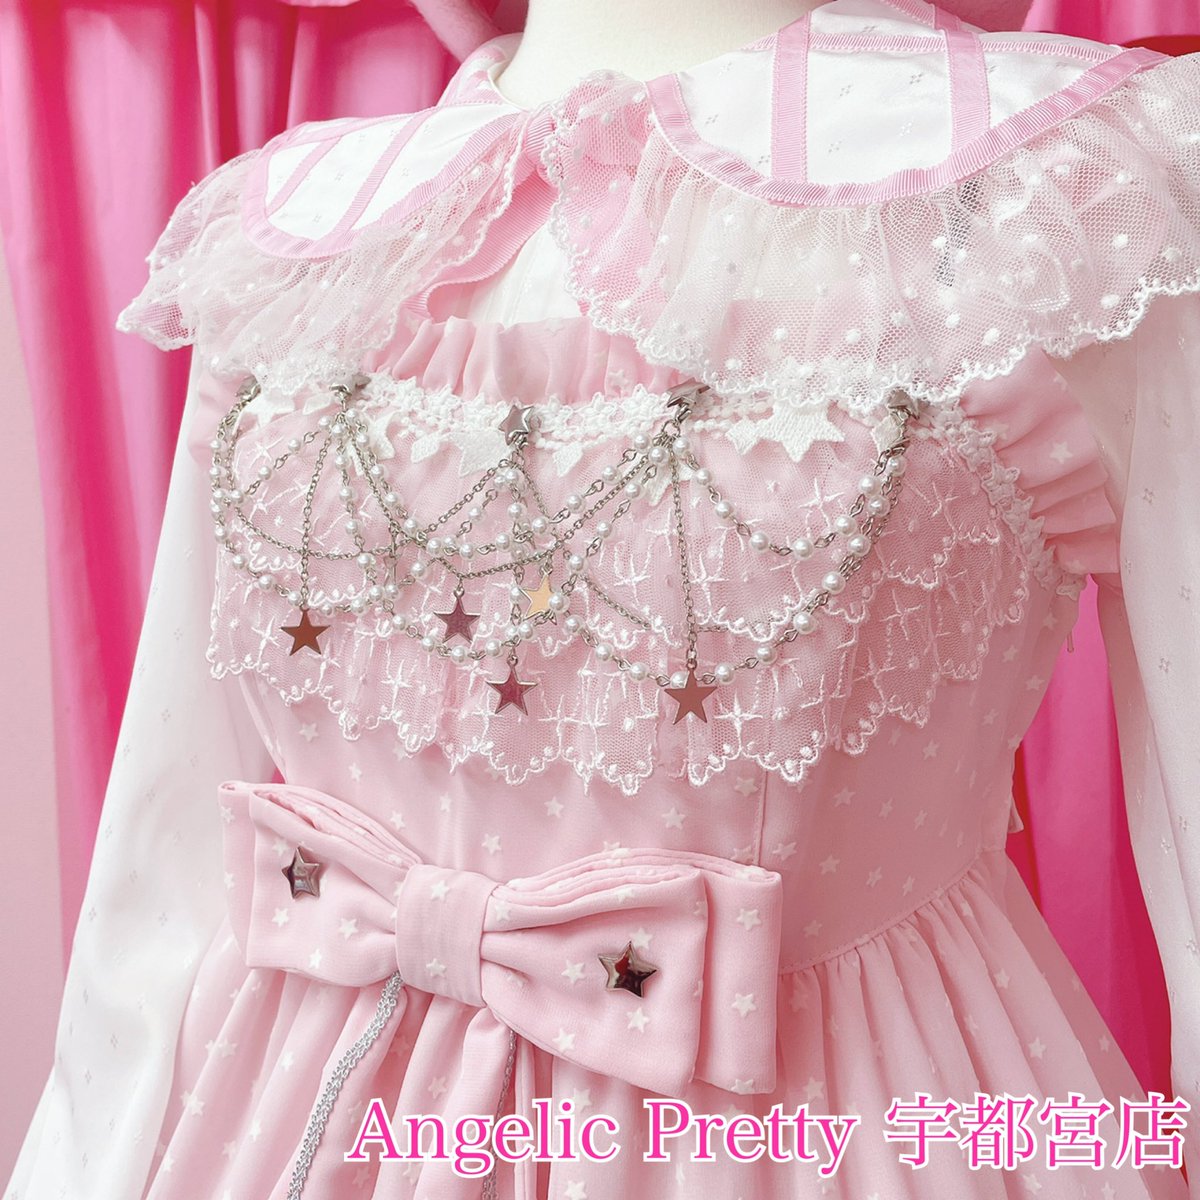 Angelic Pretty宇都宮店 on Twitter: 